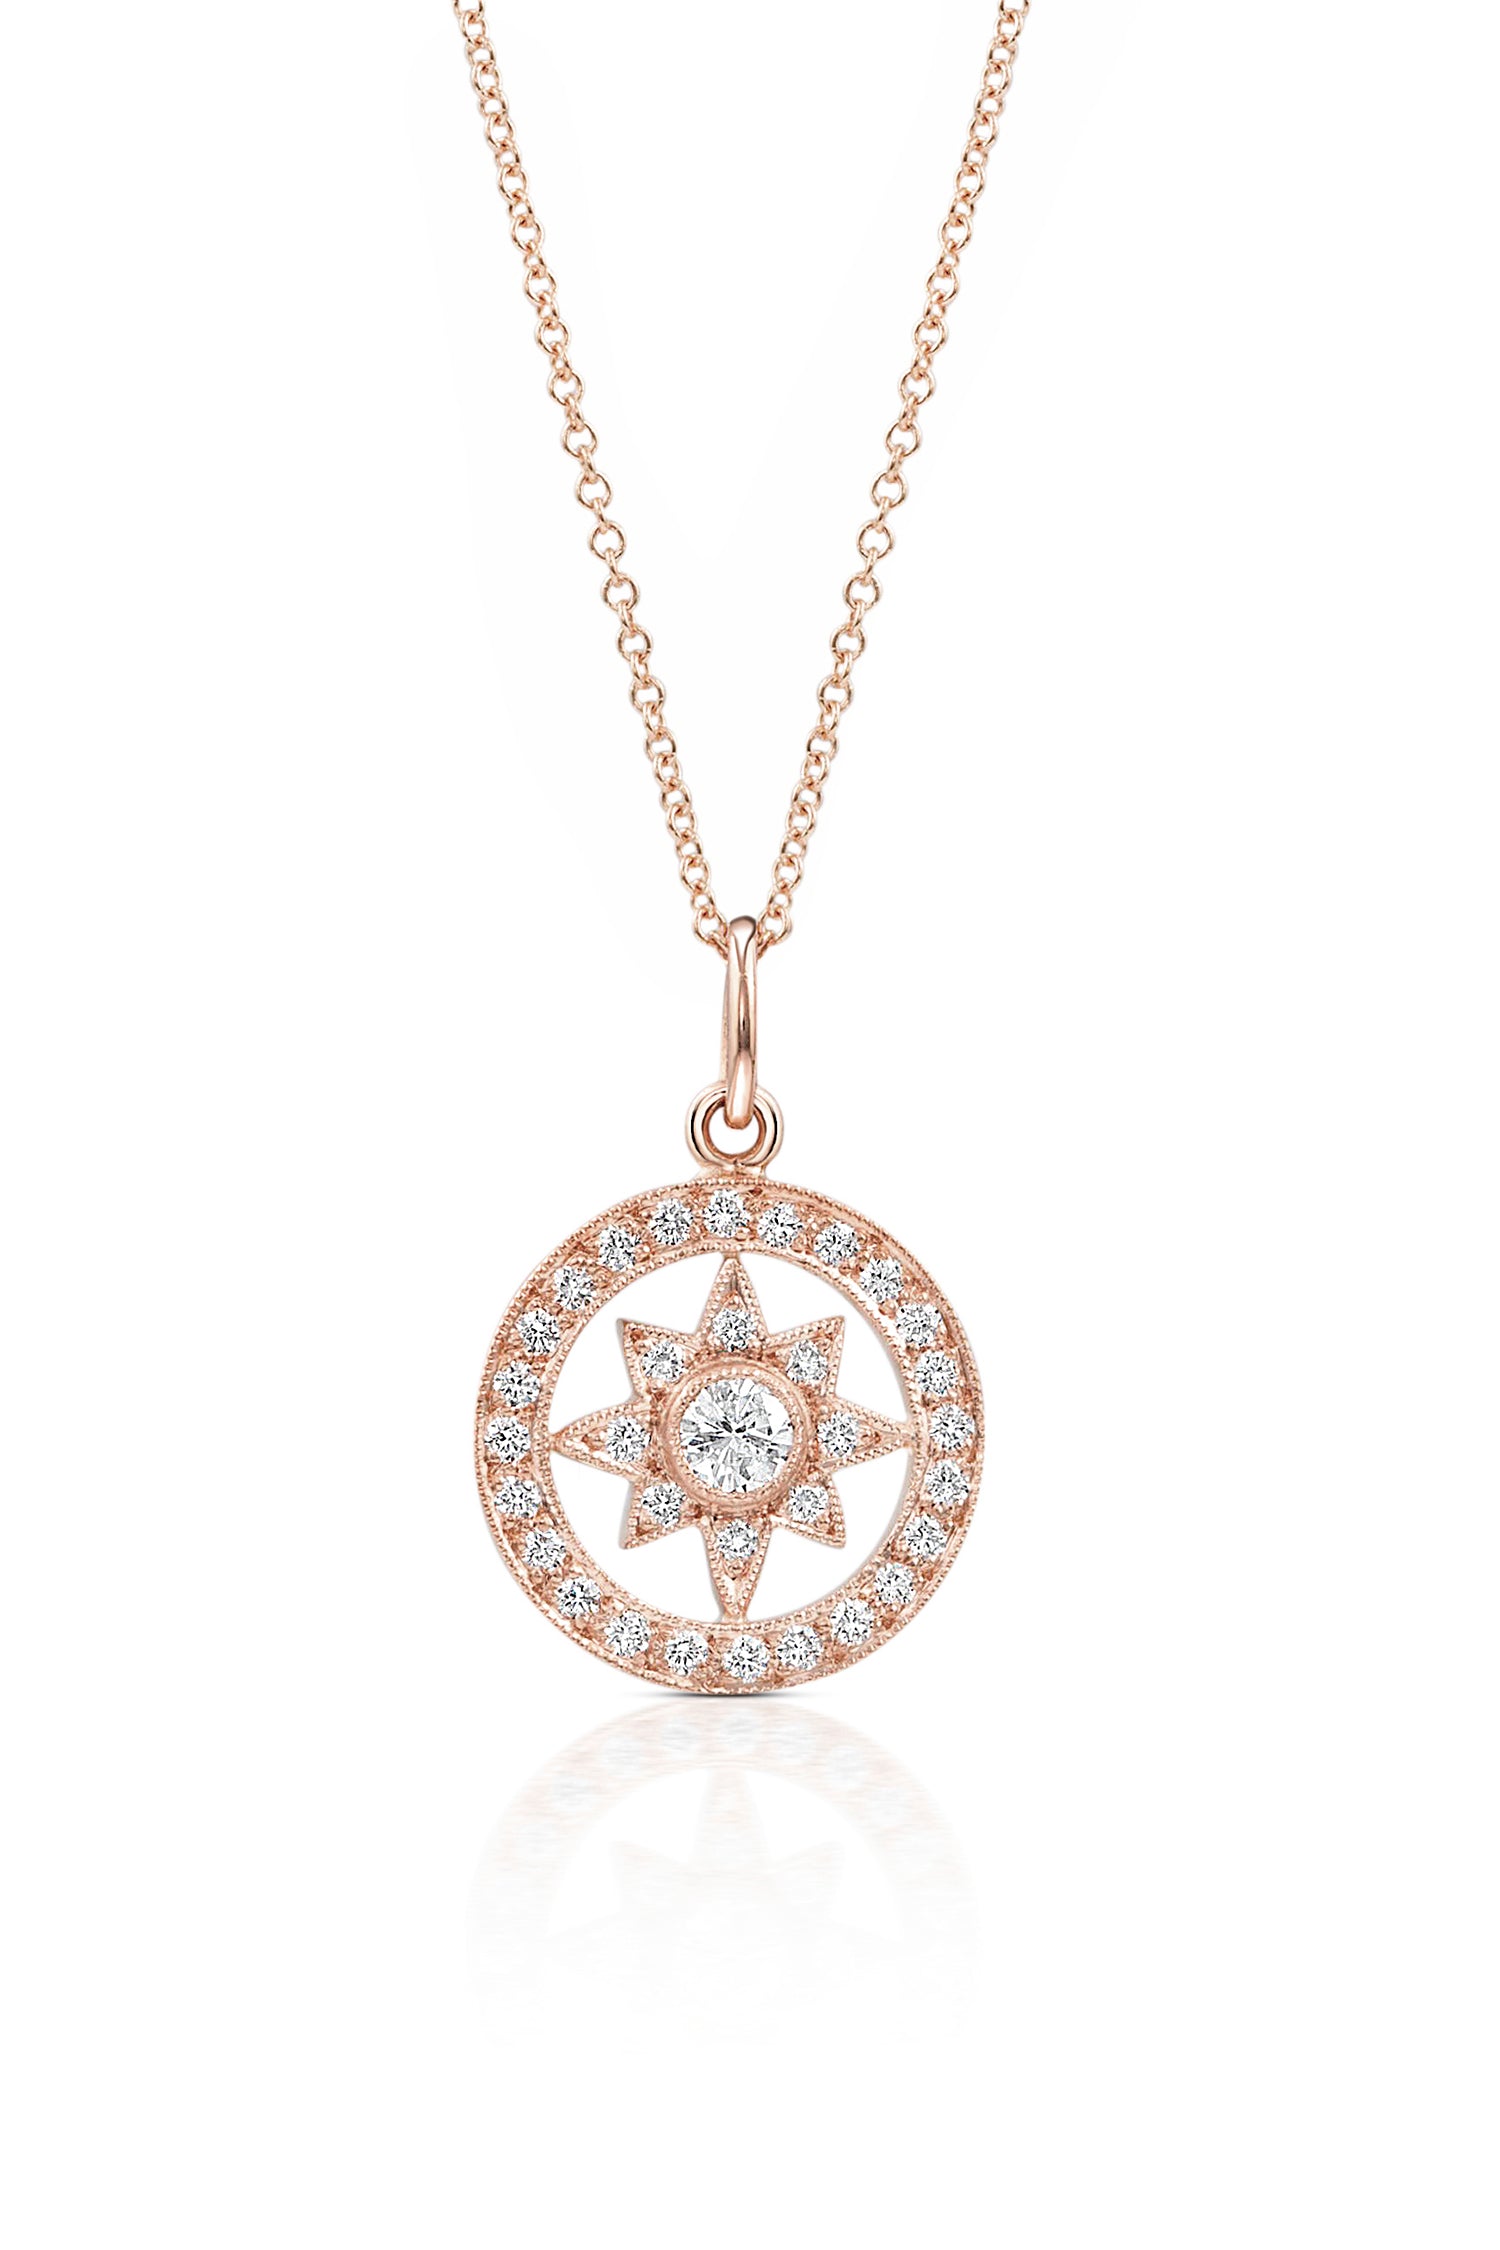 Gold and Diamond Compass Rose Pendant - Goldhaus & Alexander Jewelry Design